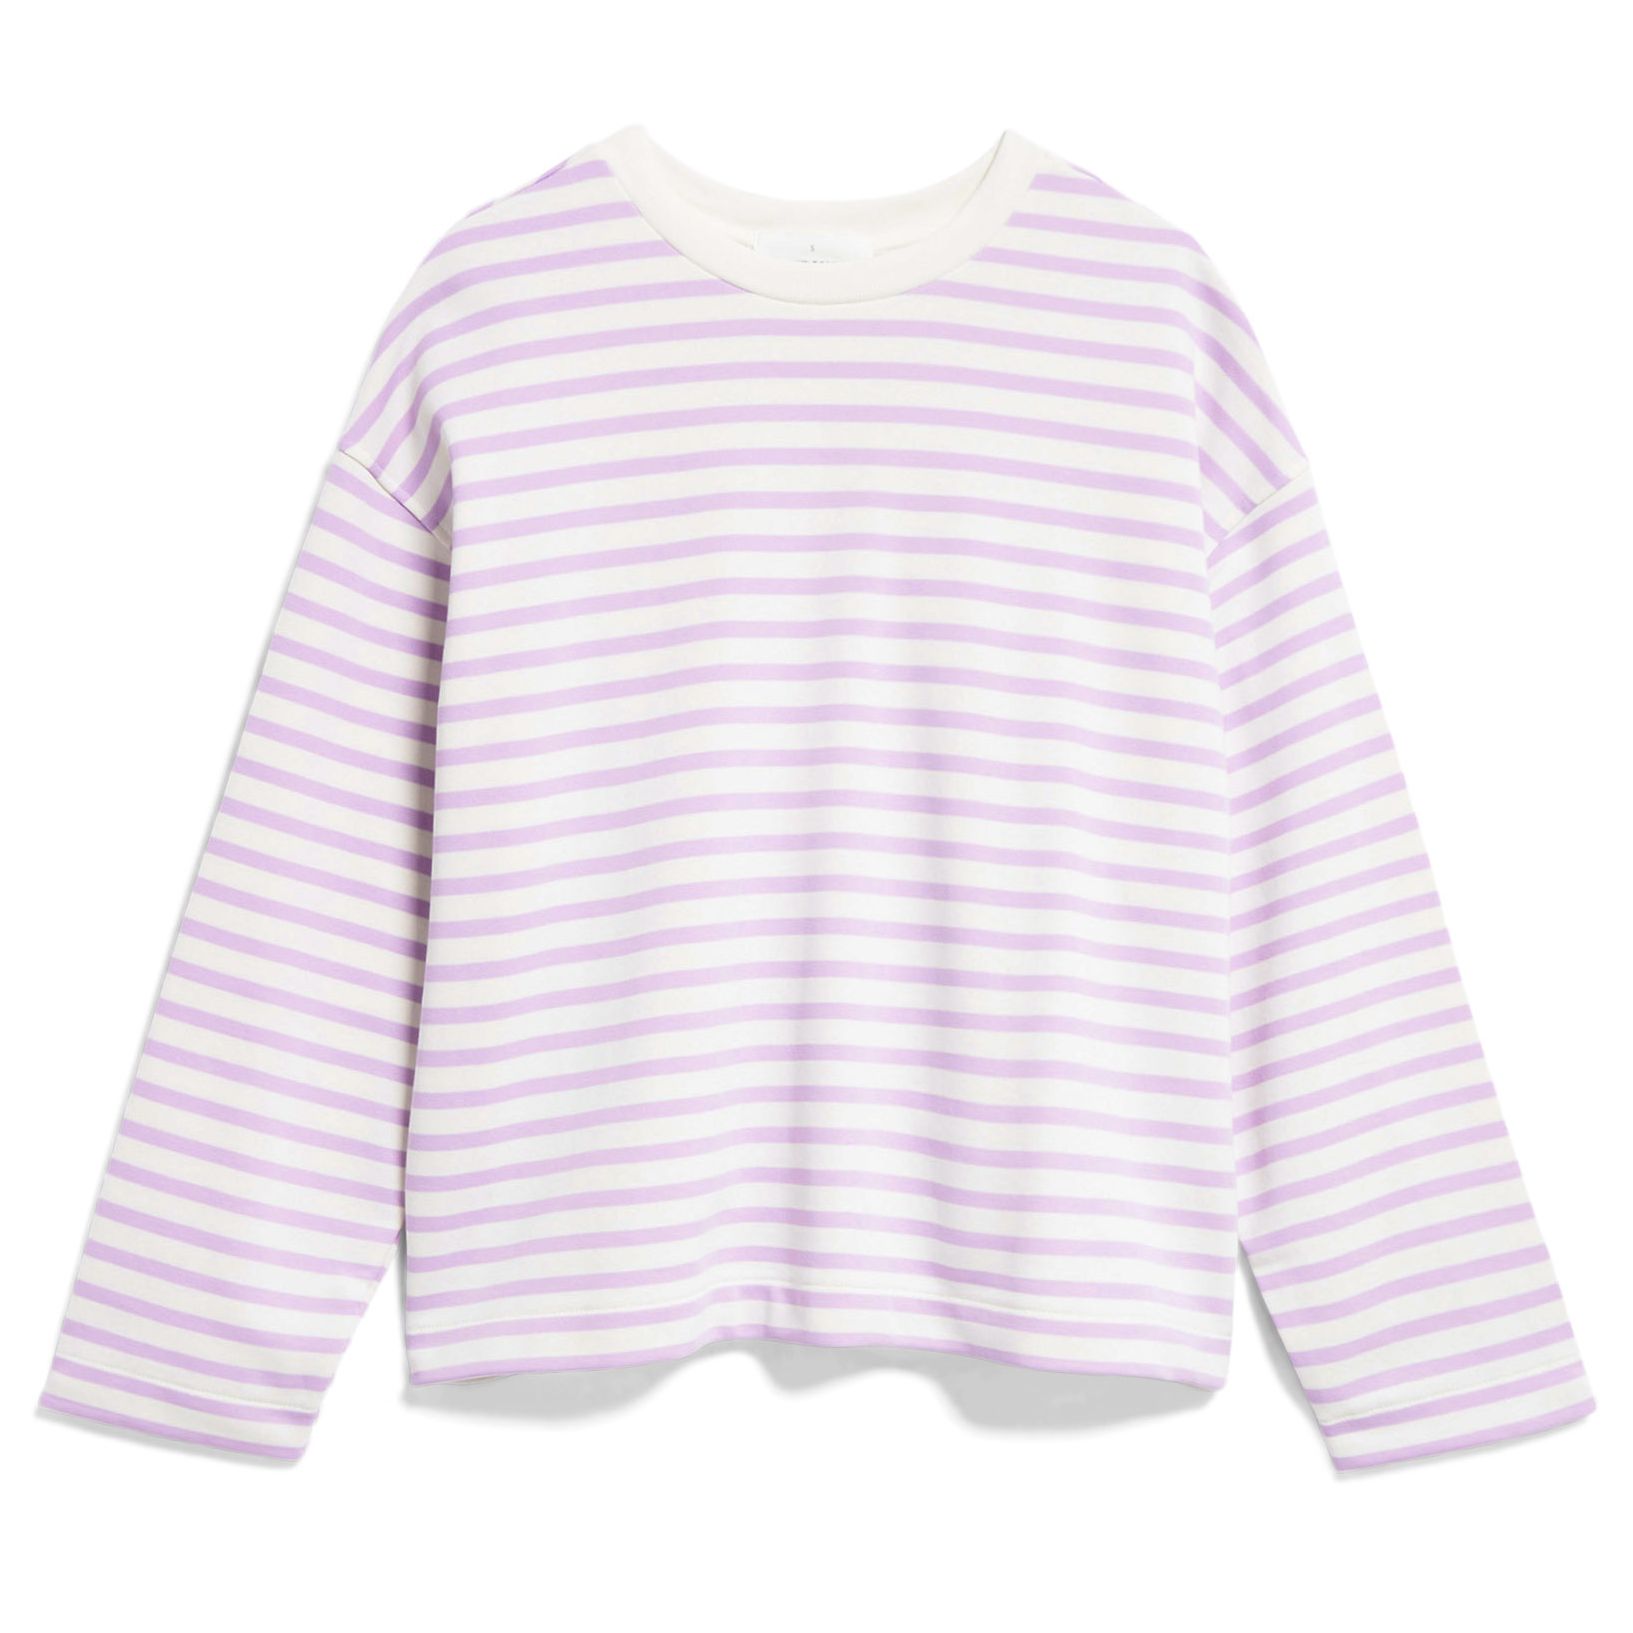 Sweatshirt FRANKAA MAARLEN STRIPE lavender light-undyed